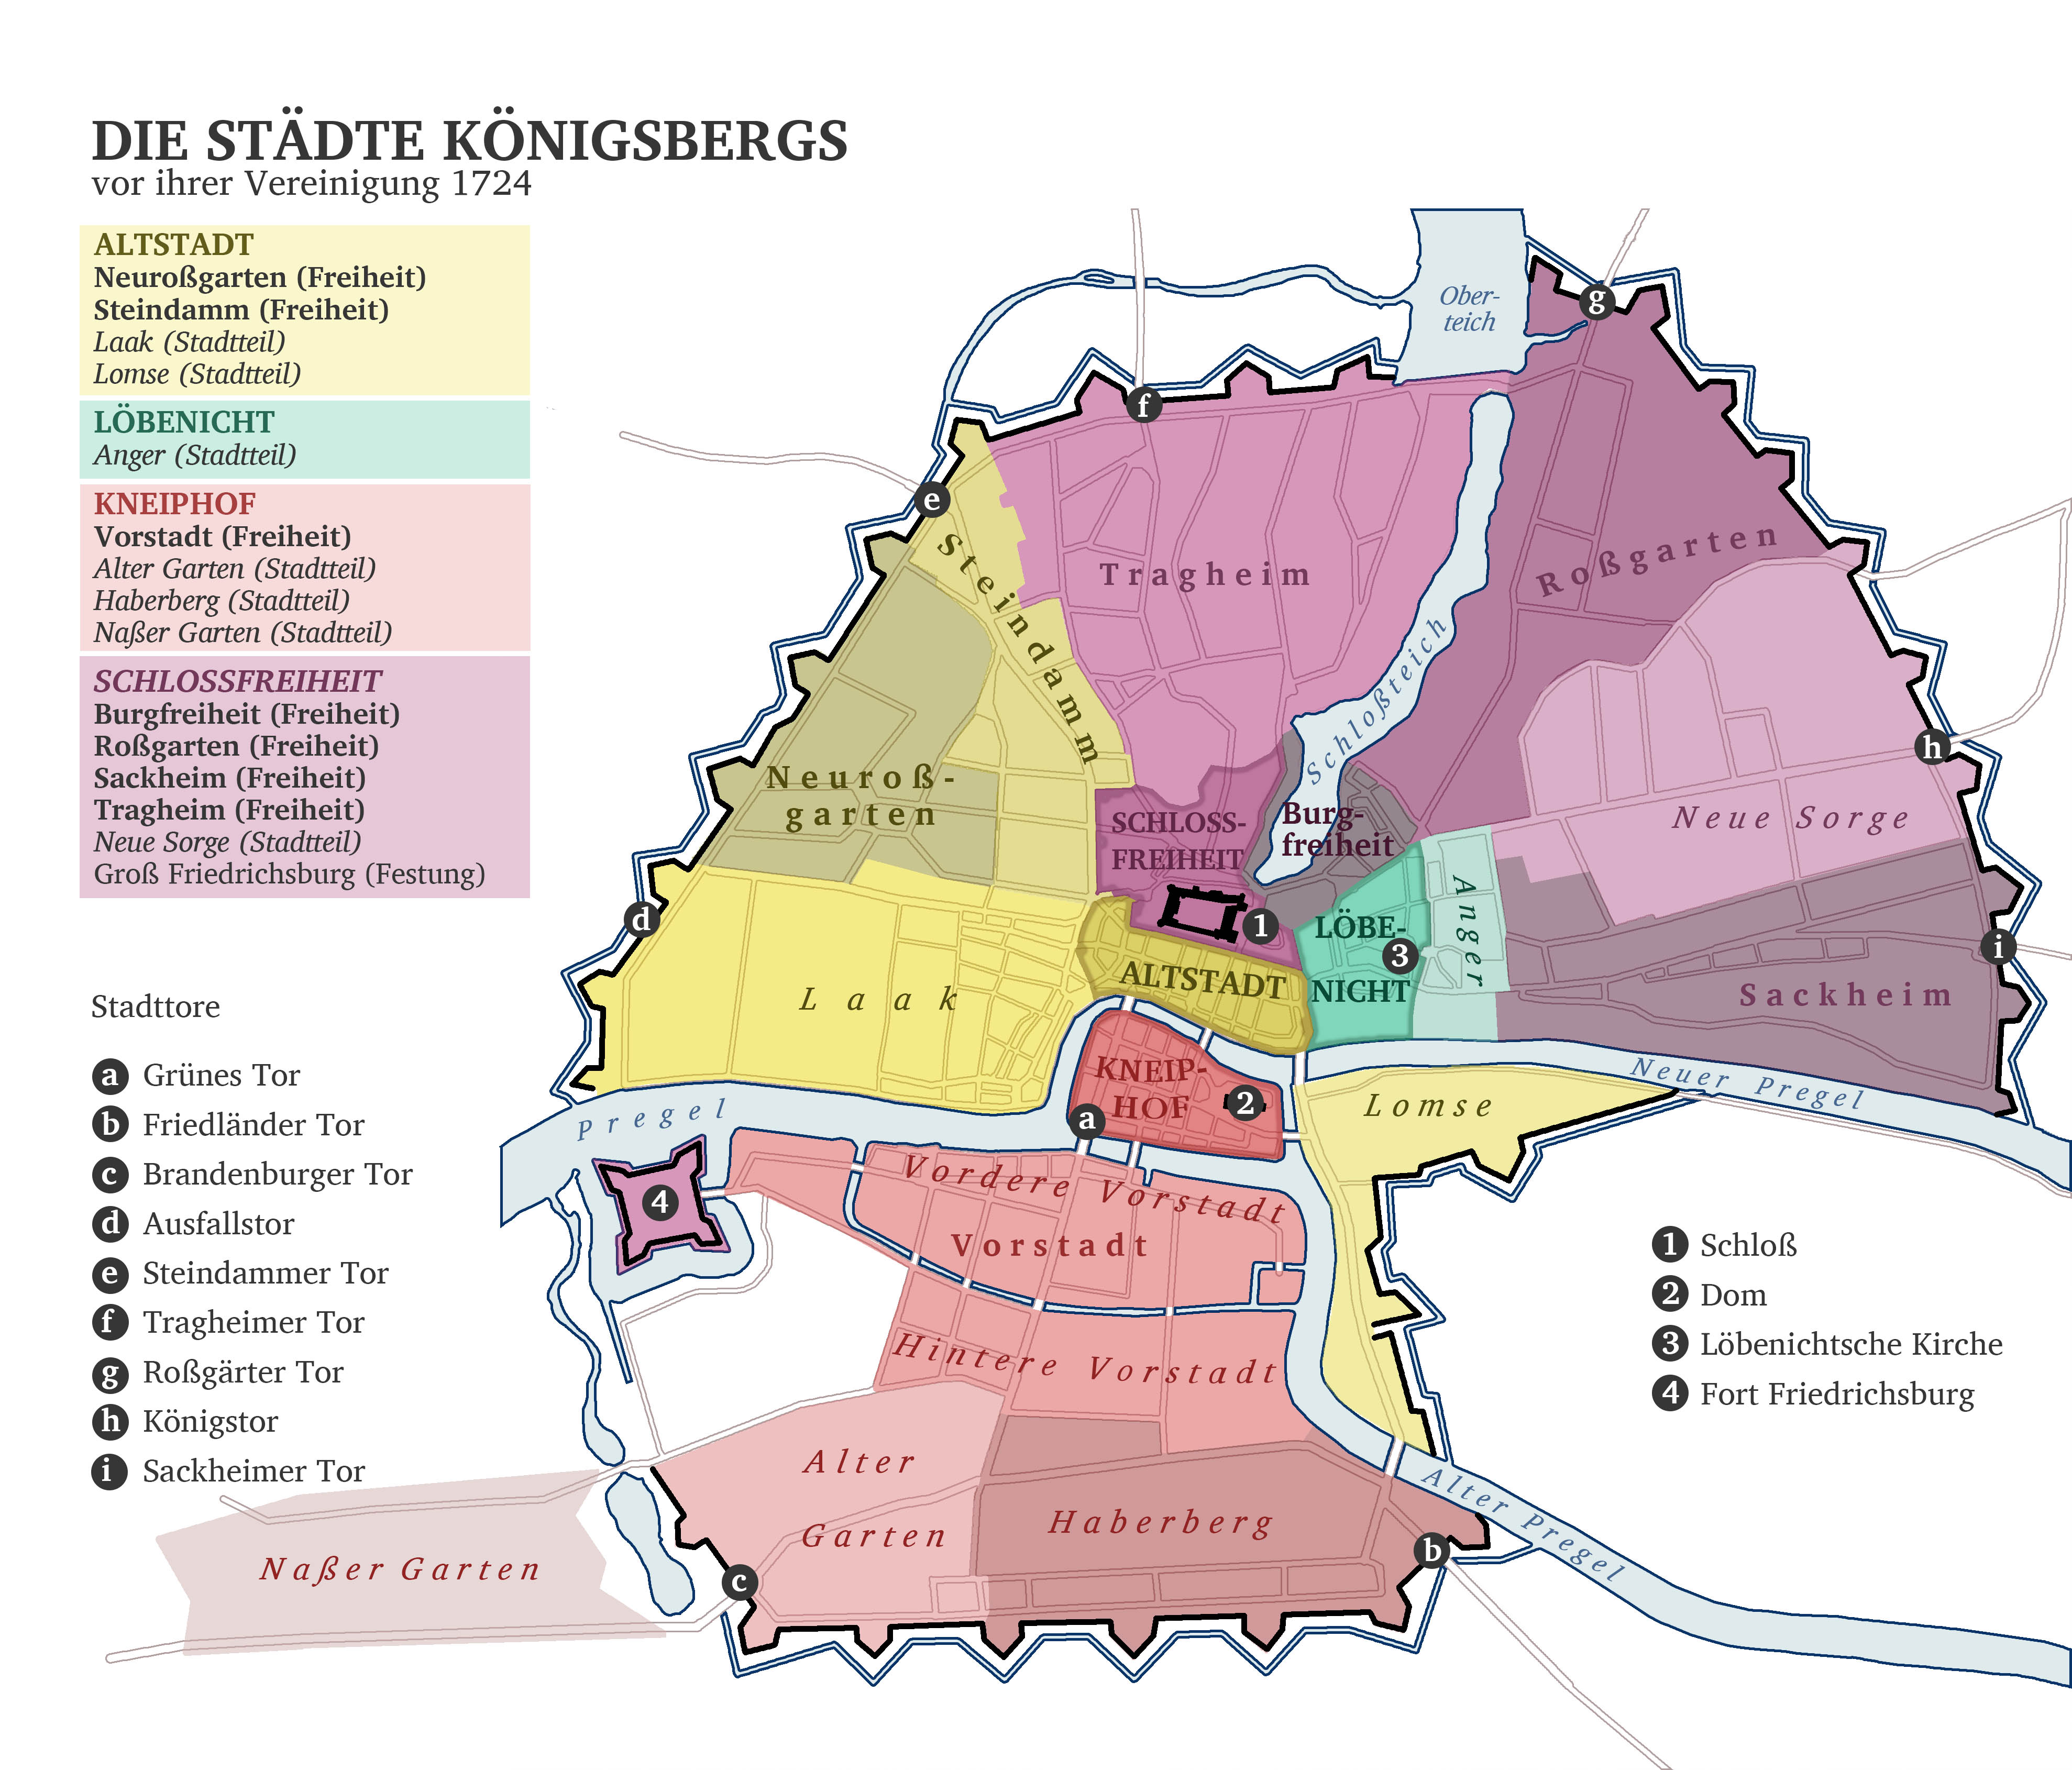 regensburg egyetlen városi